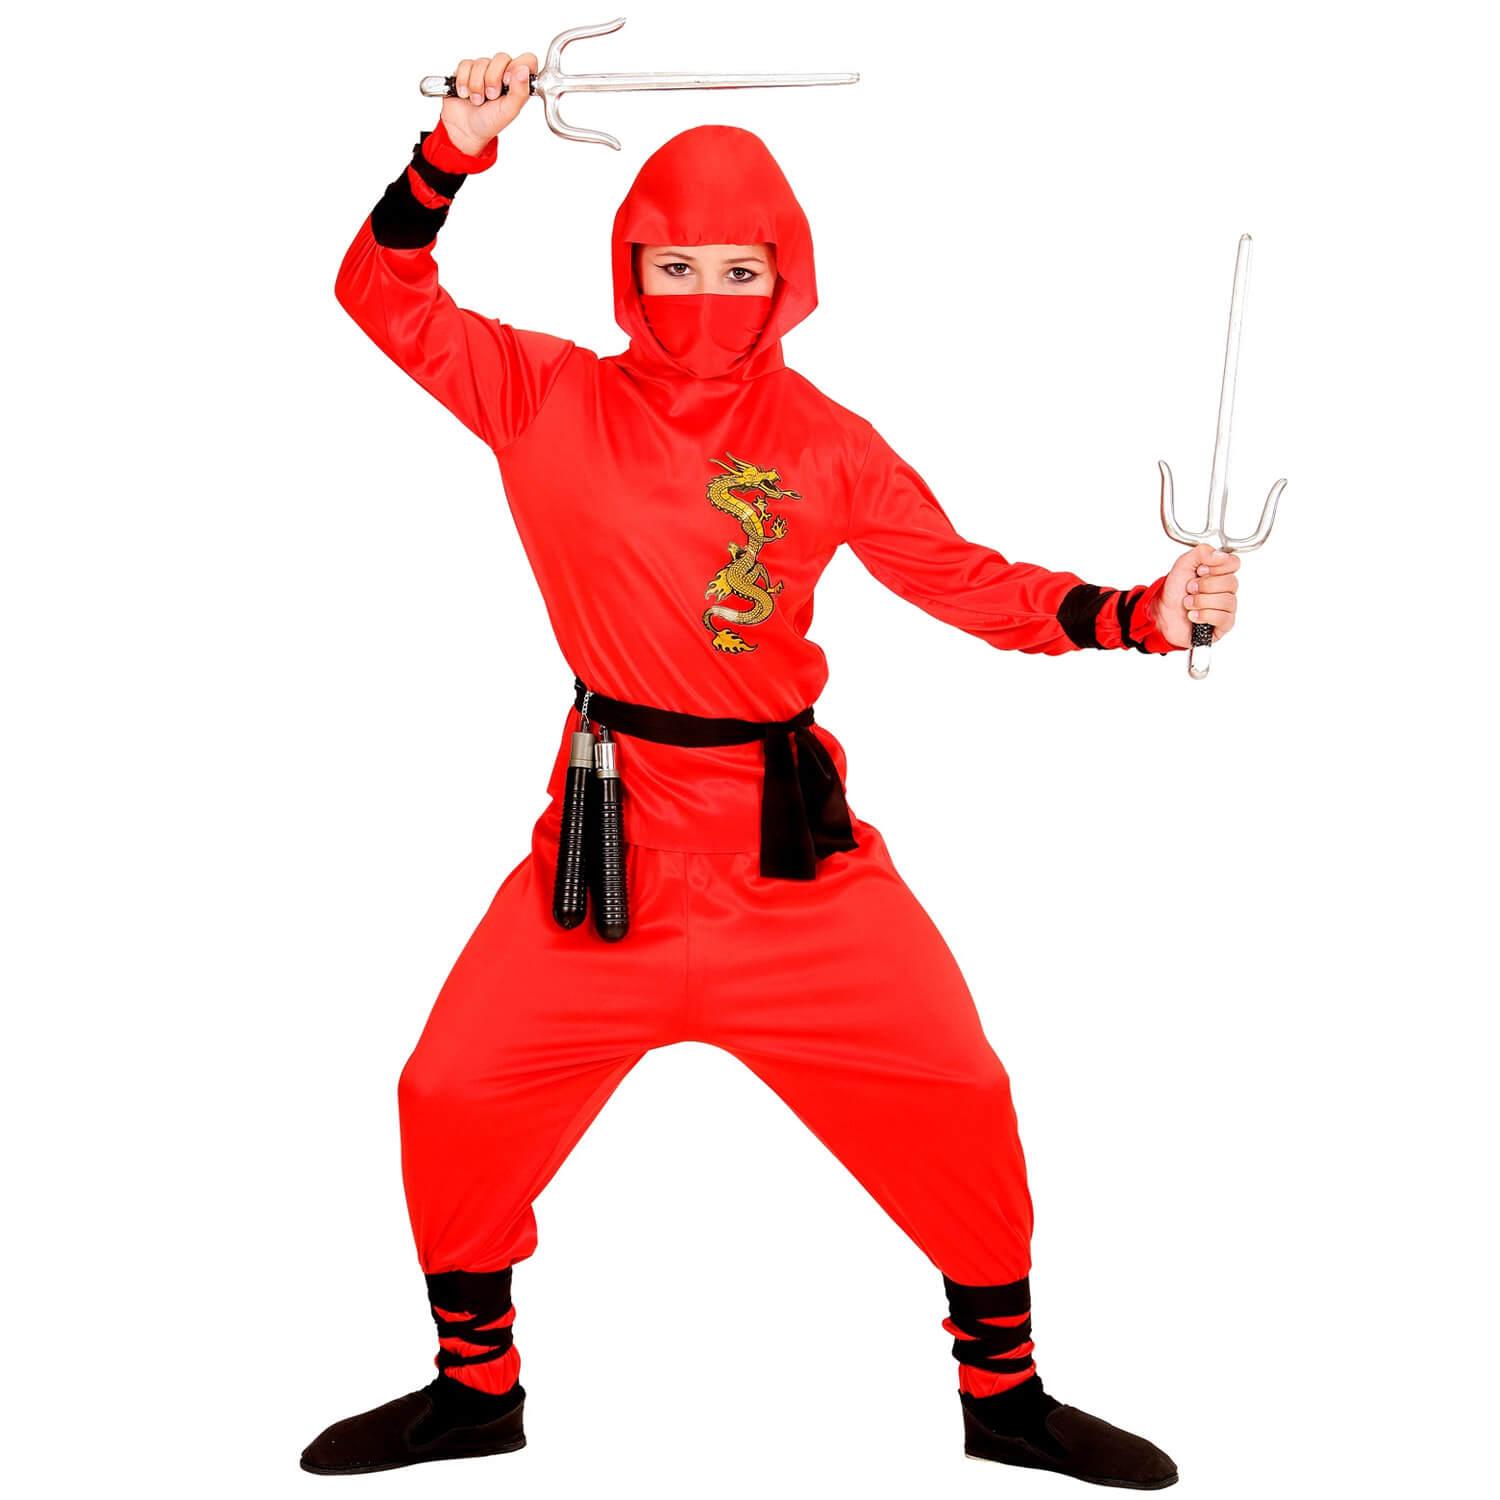 Déguisement ninja dragon rouge garçon